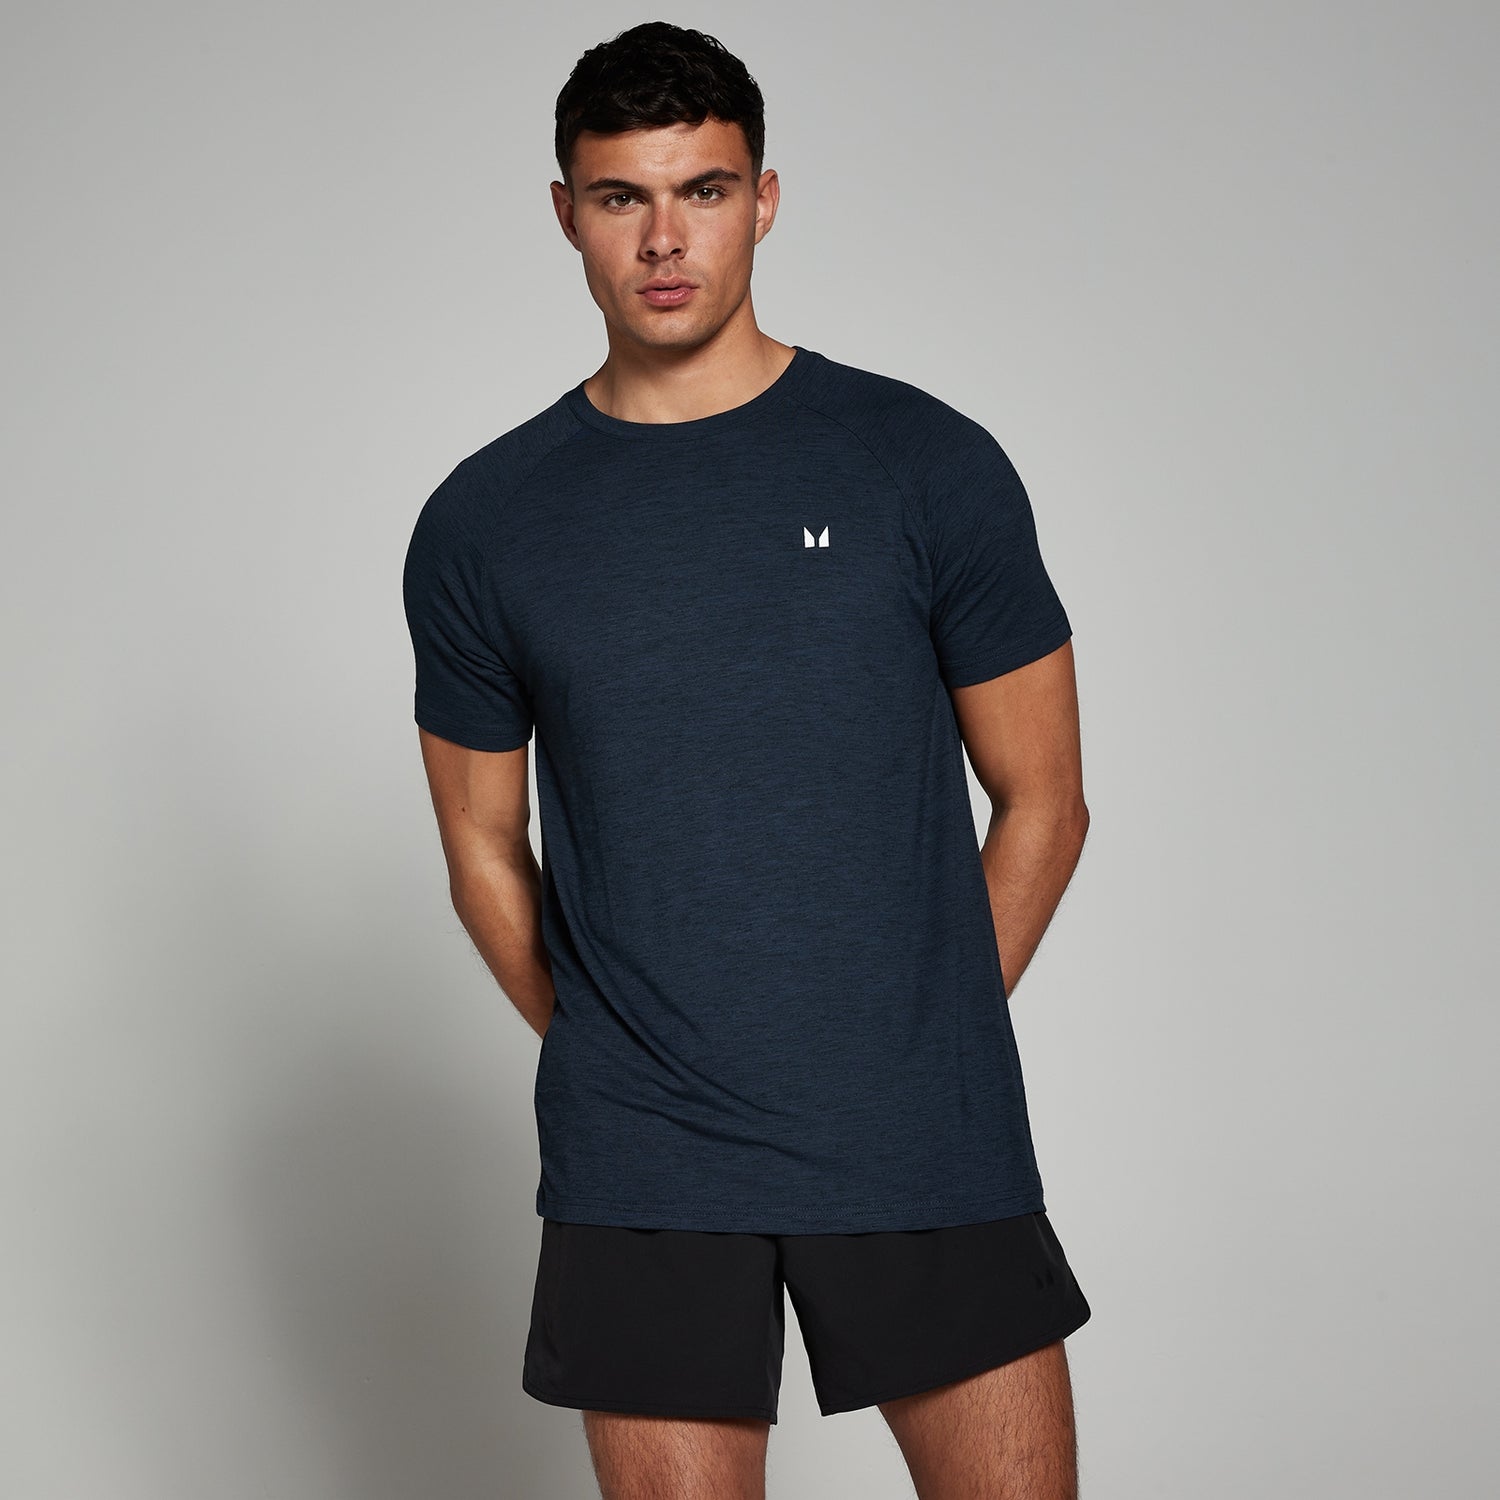 Мужская футболка с короткими рукавами MP Performance — темно-синий меланж - XS